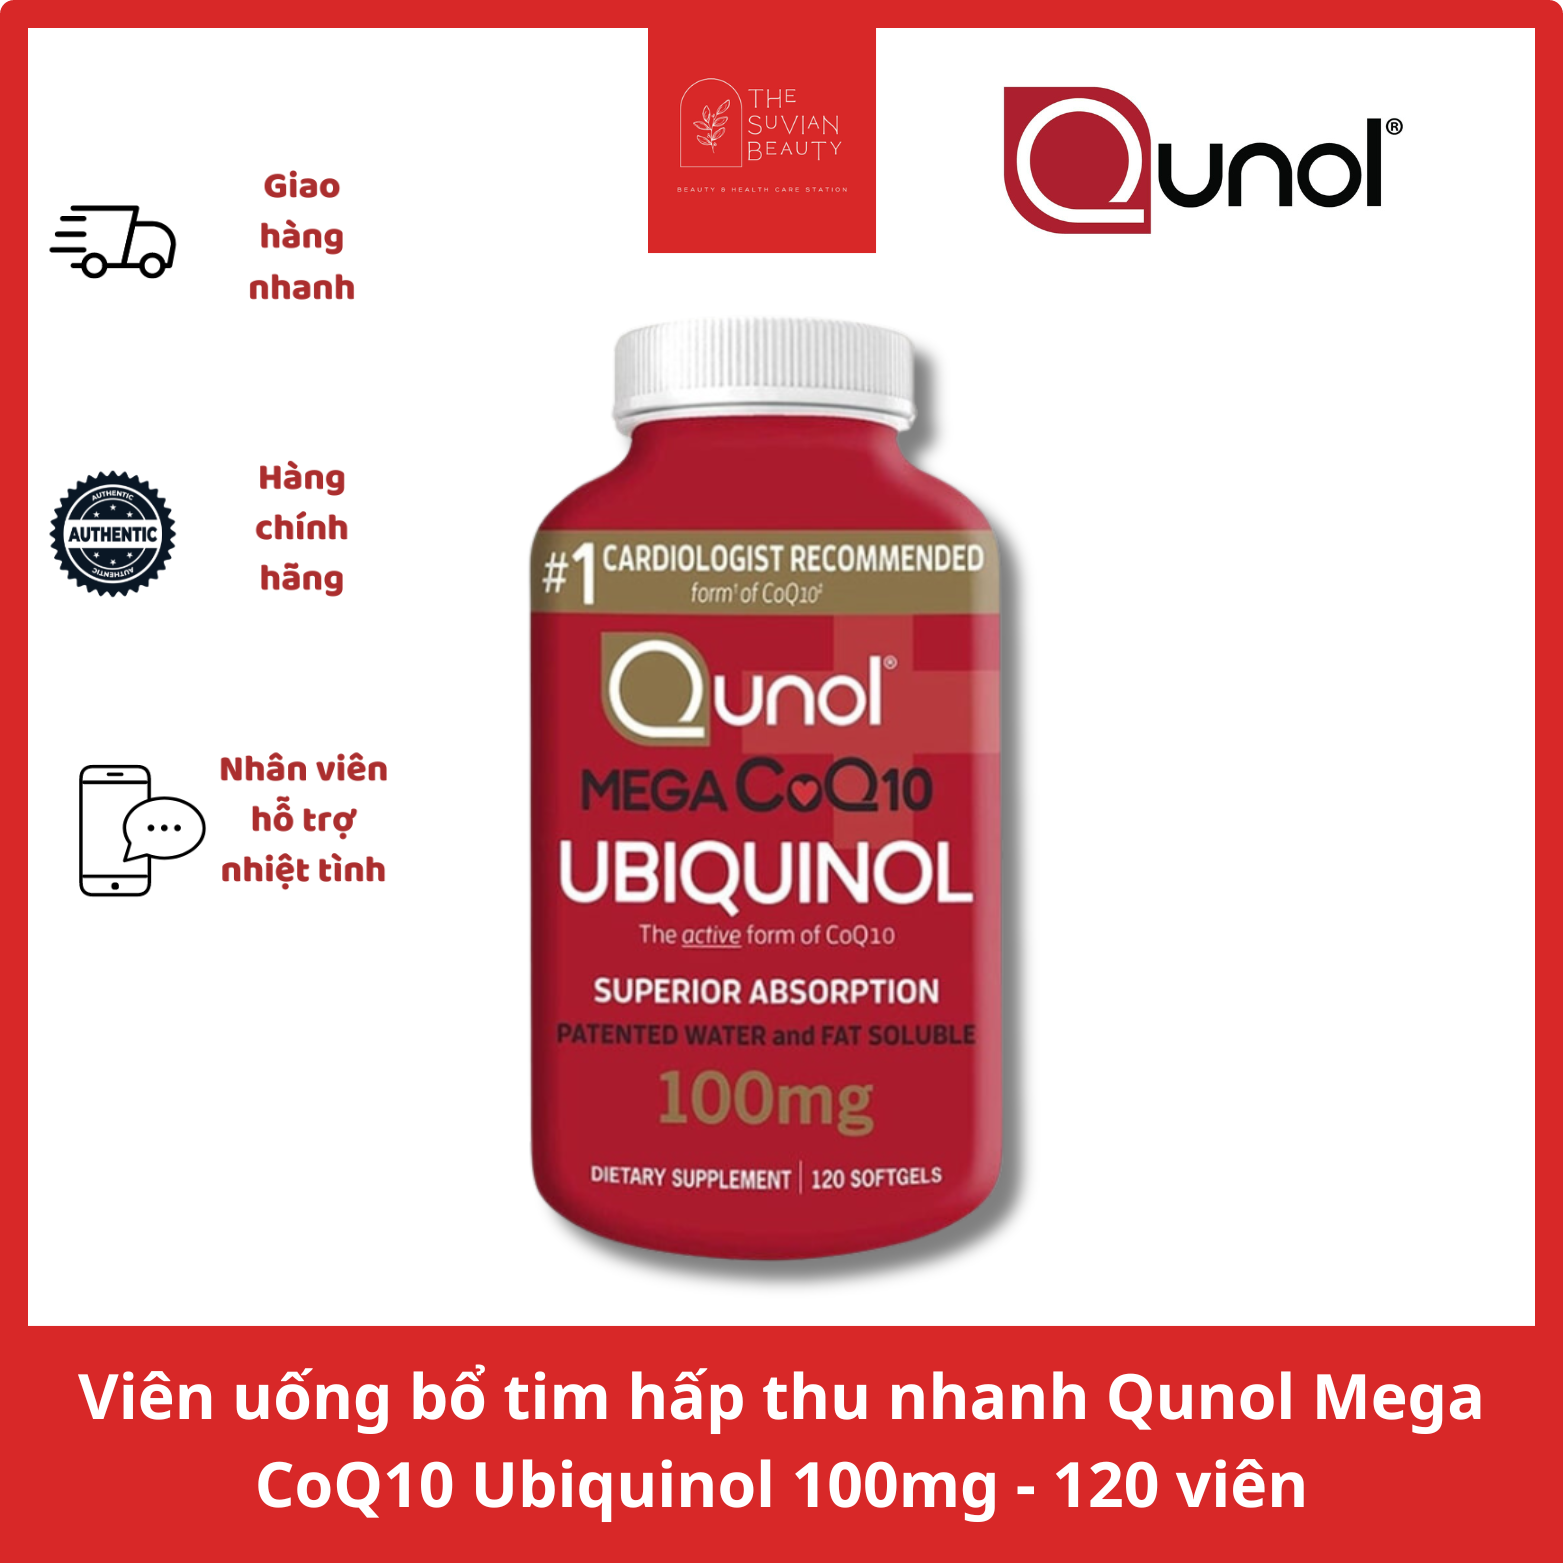 Qunol Mega CoQ10 Ubiquinol 100mg Rapid Absorption - 120 tablet